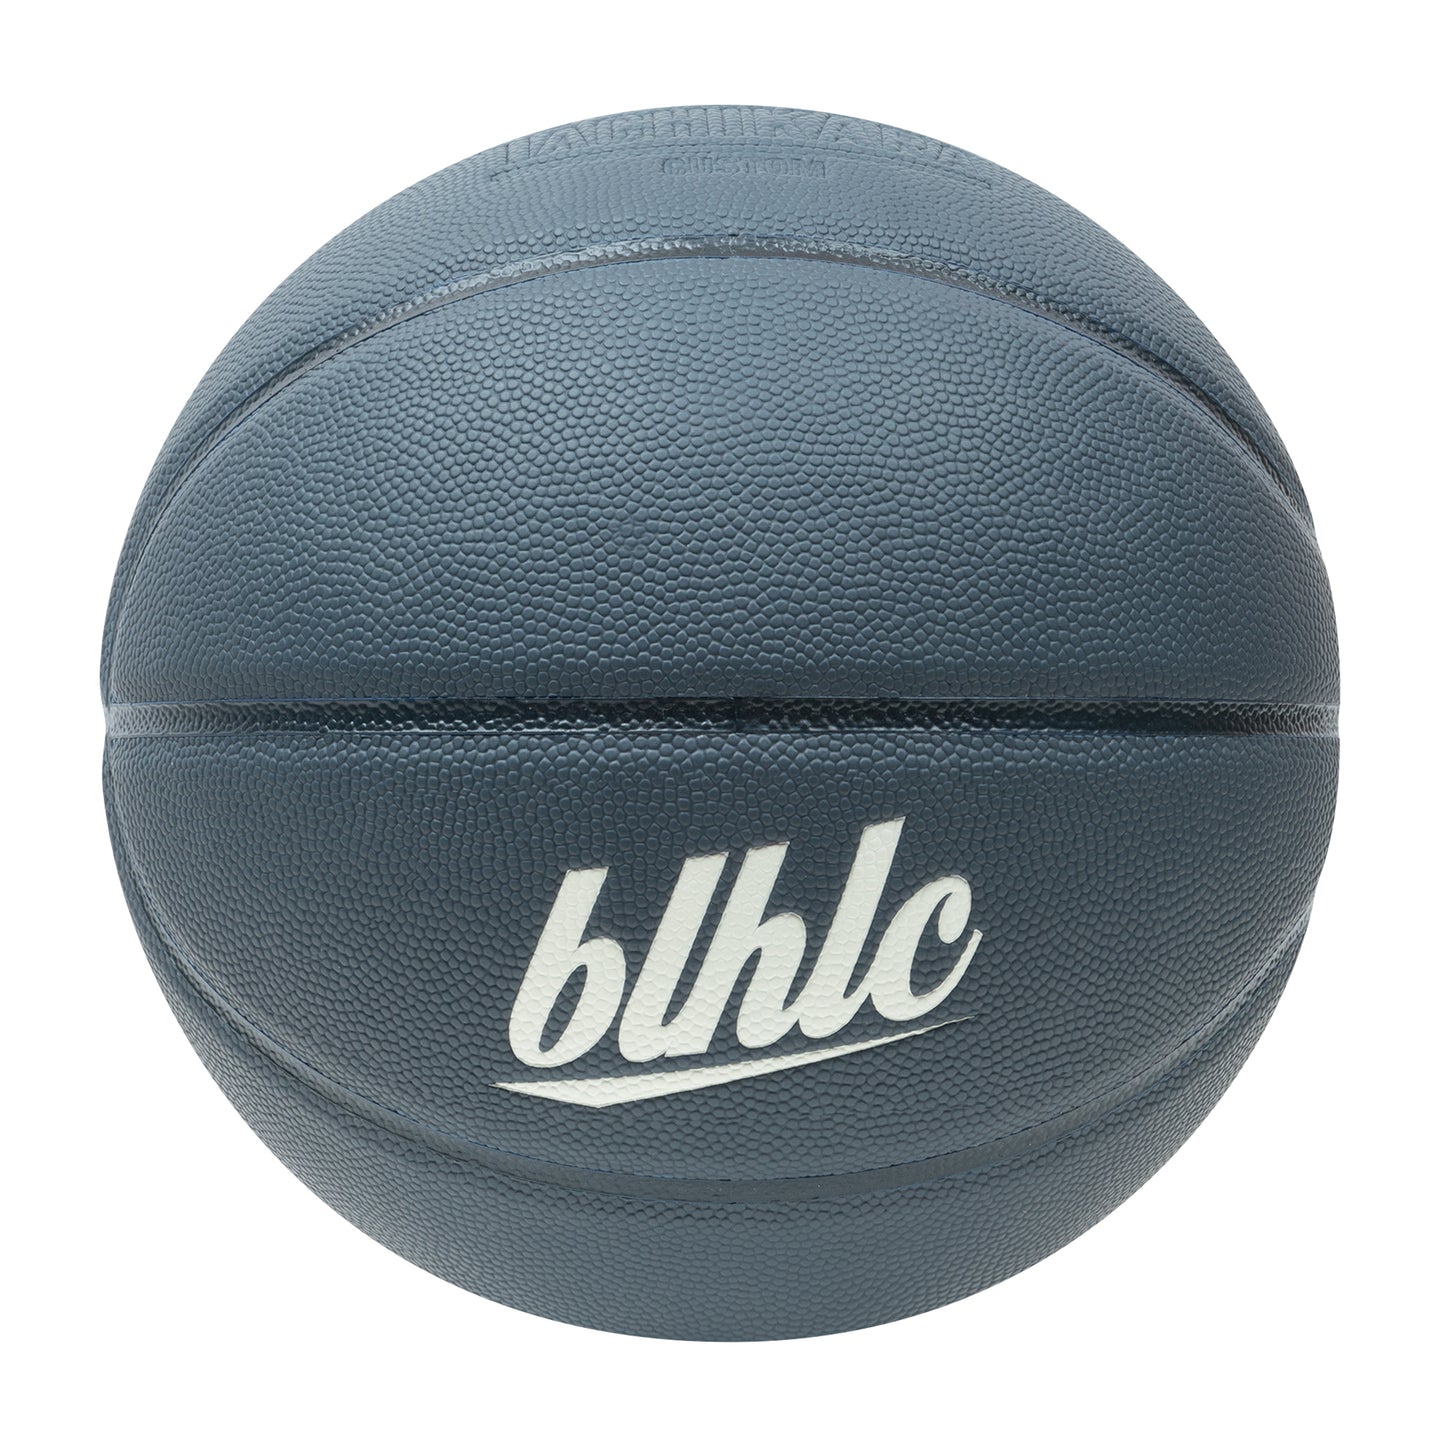 Playground Basketball / ballaholic x TACHIKARA (slate blue/dark navy/white) 7